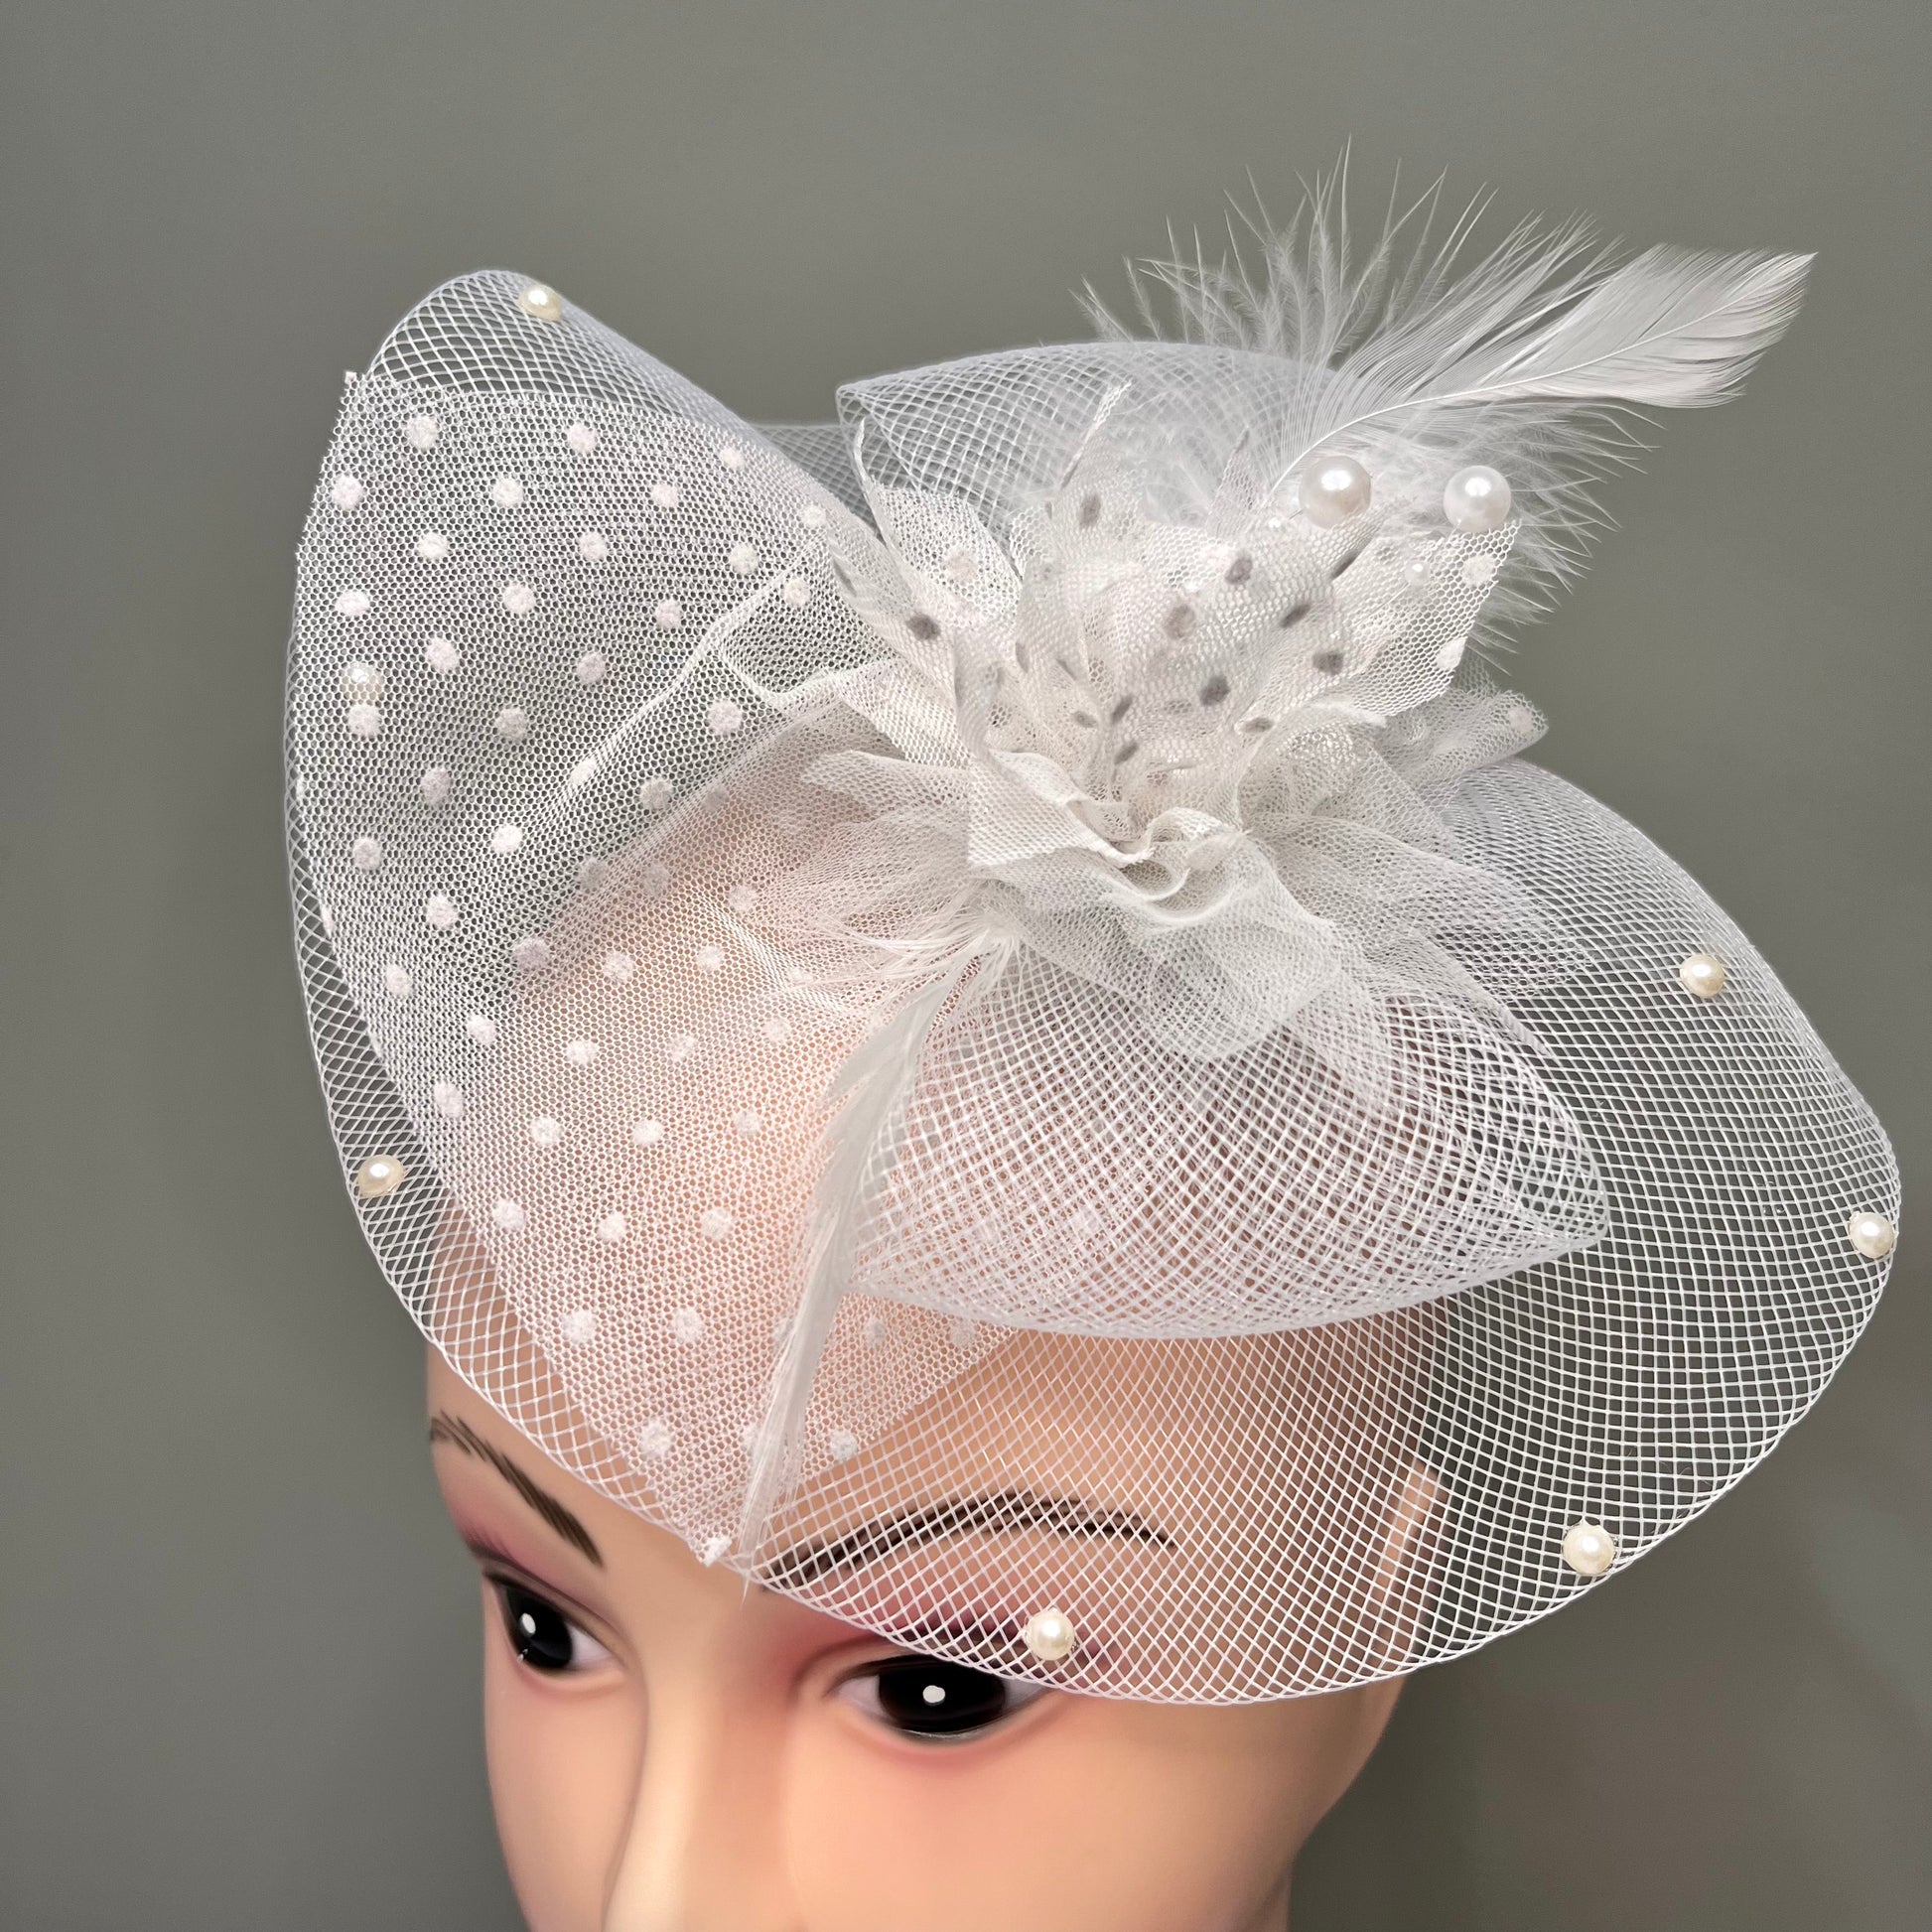 Designer White Fascinator Hat | Millinery Couture Headpiece